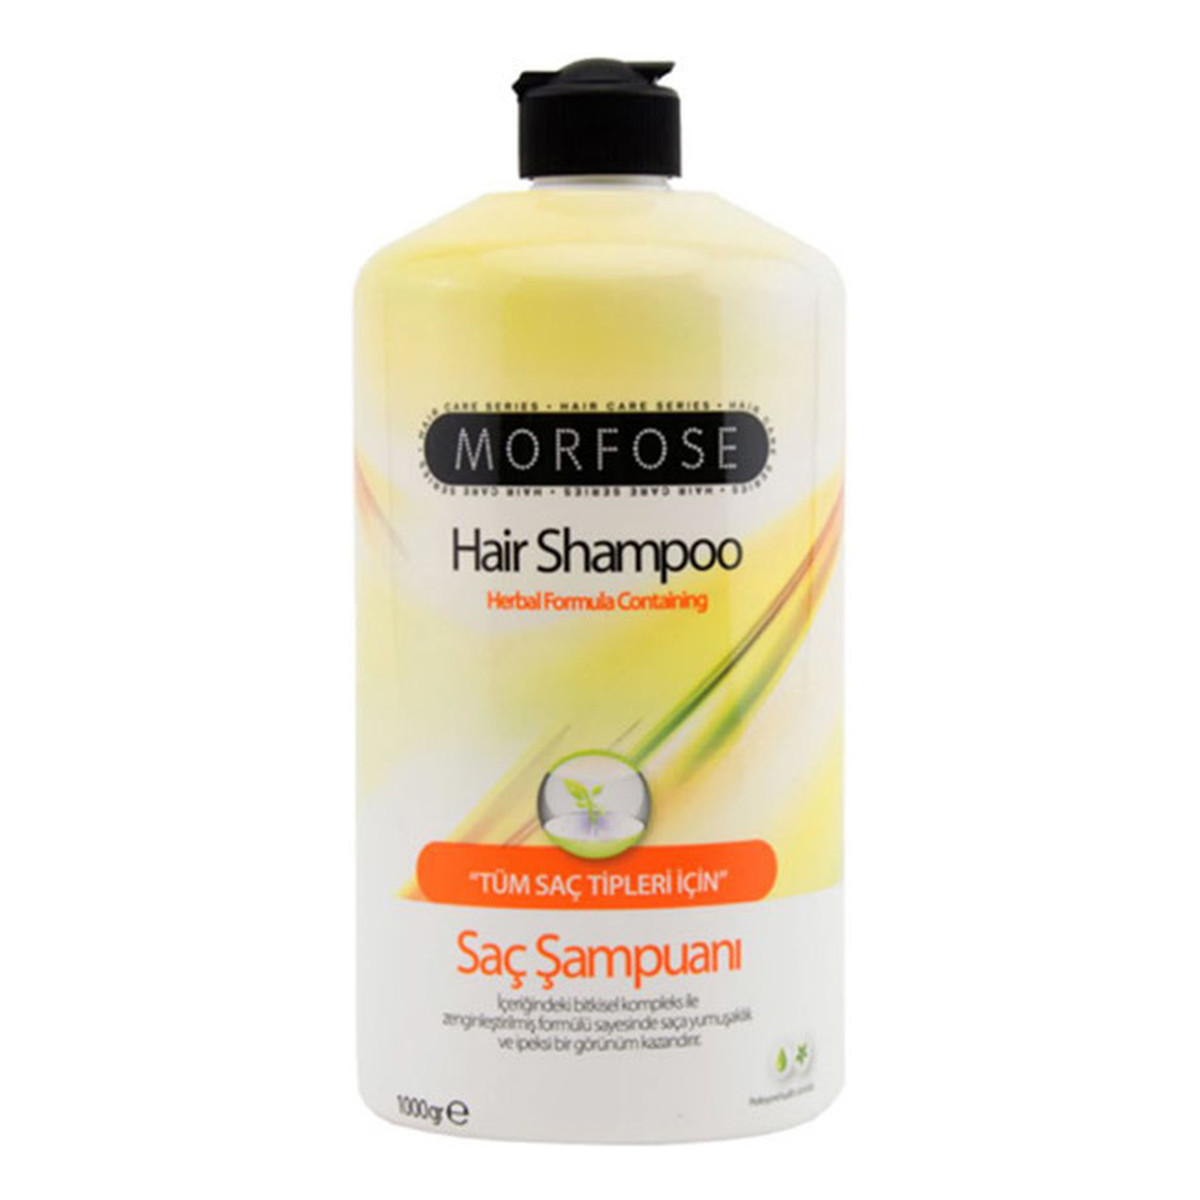 morfose szampon opinie